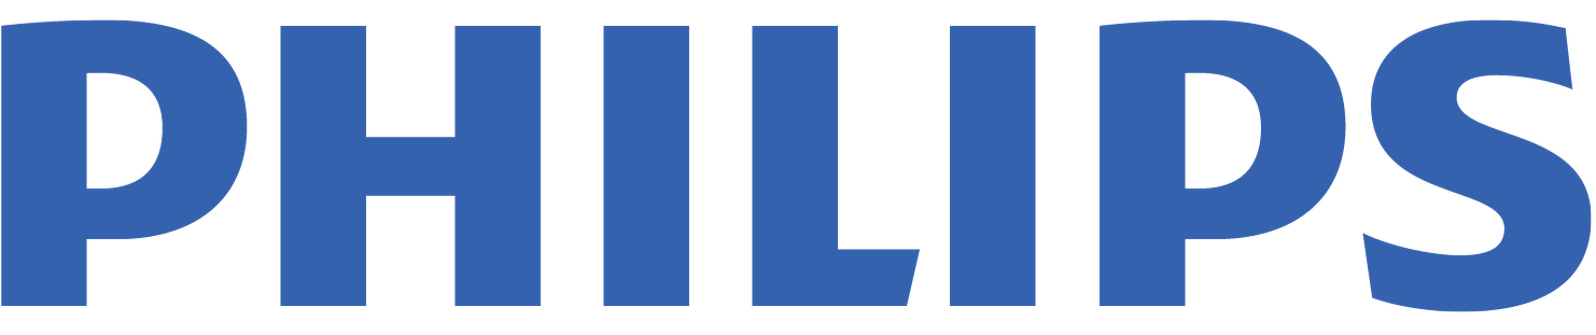 Blue Philips Logo